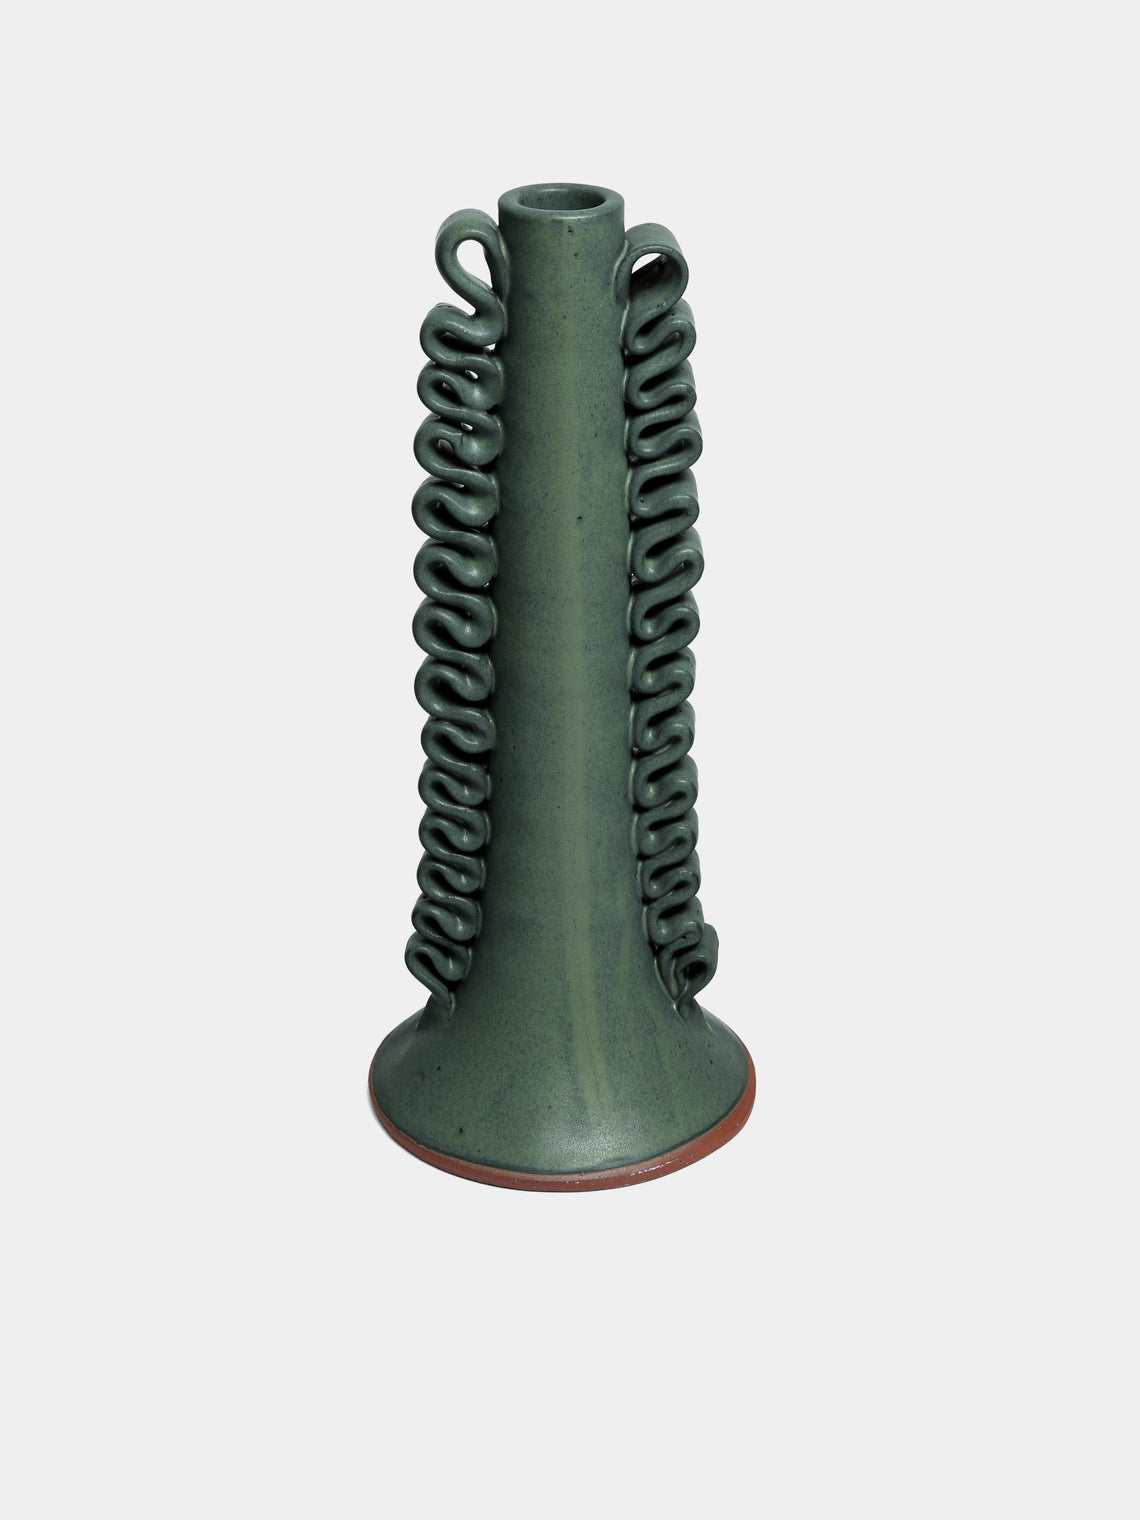 Perla Valtierra - Ribete Hand-Glazed Ceramic Large Candle Holder - Green - ABASK - 